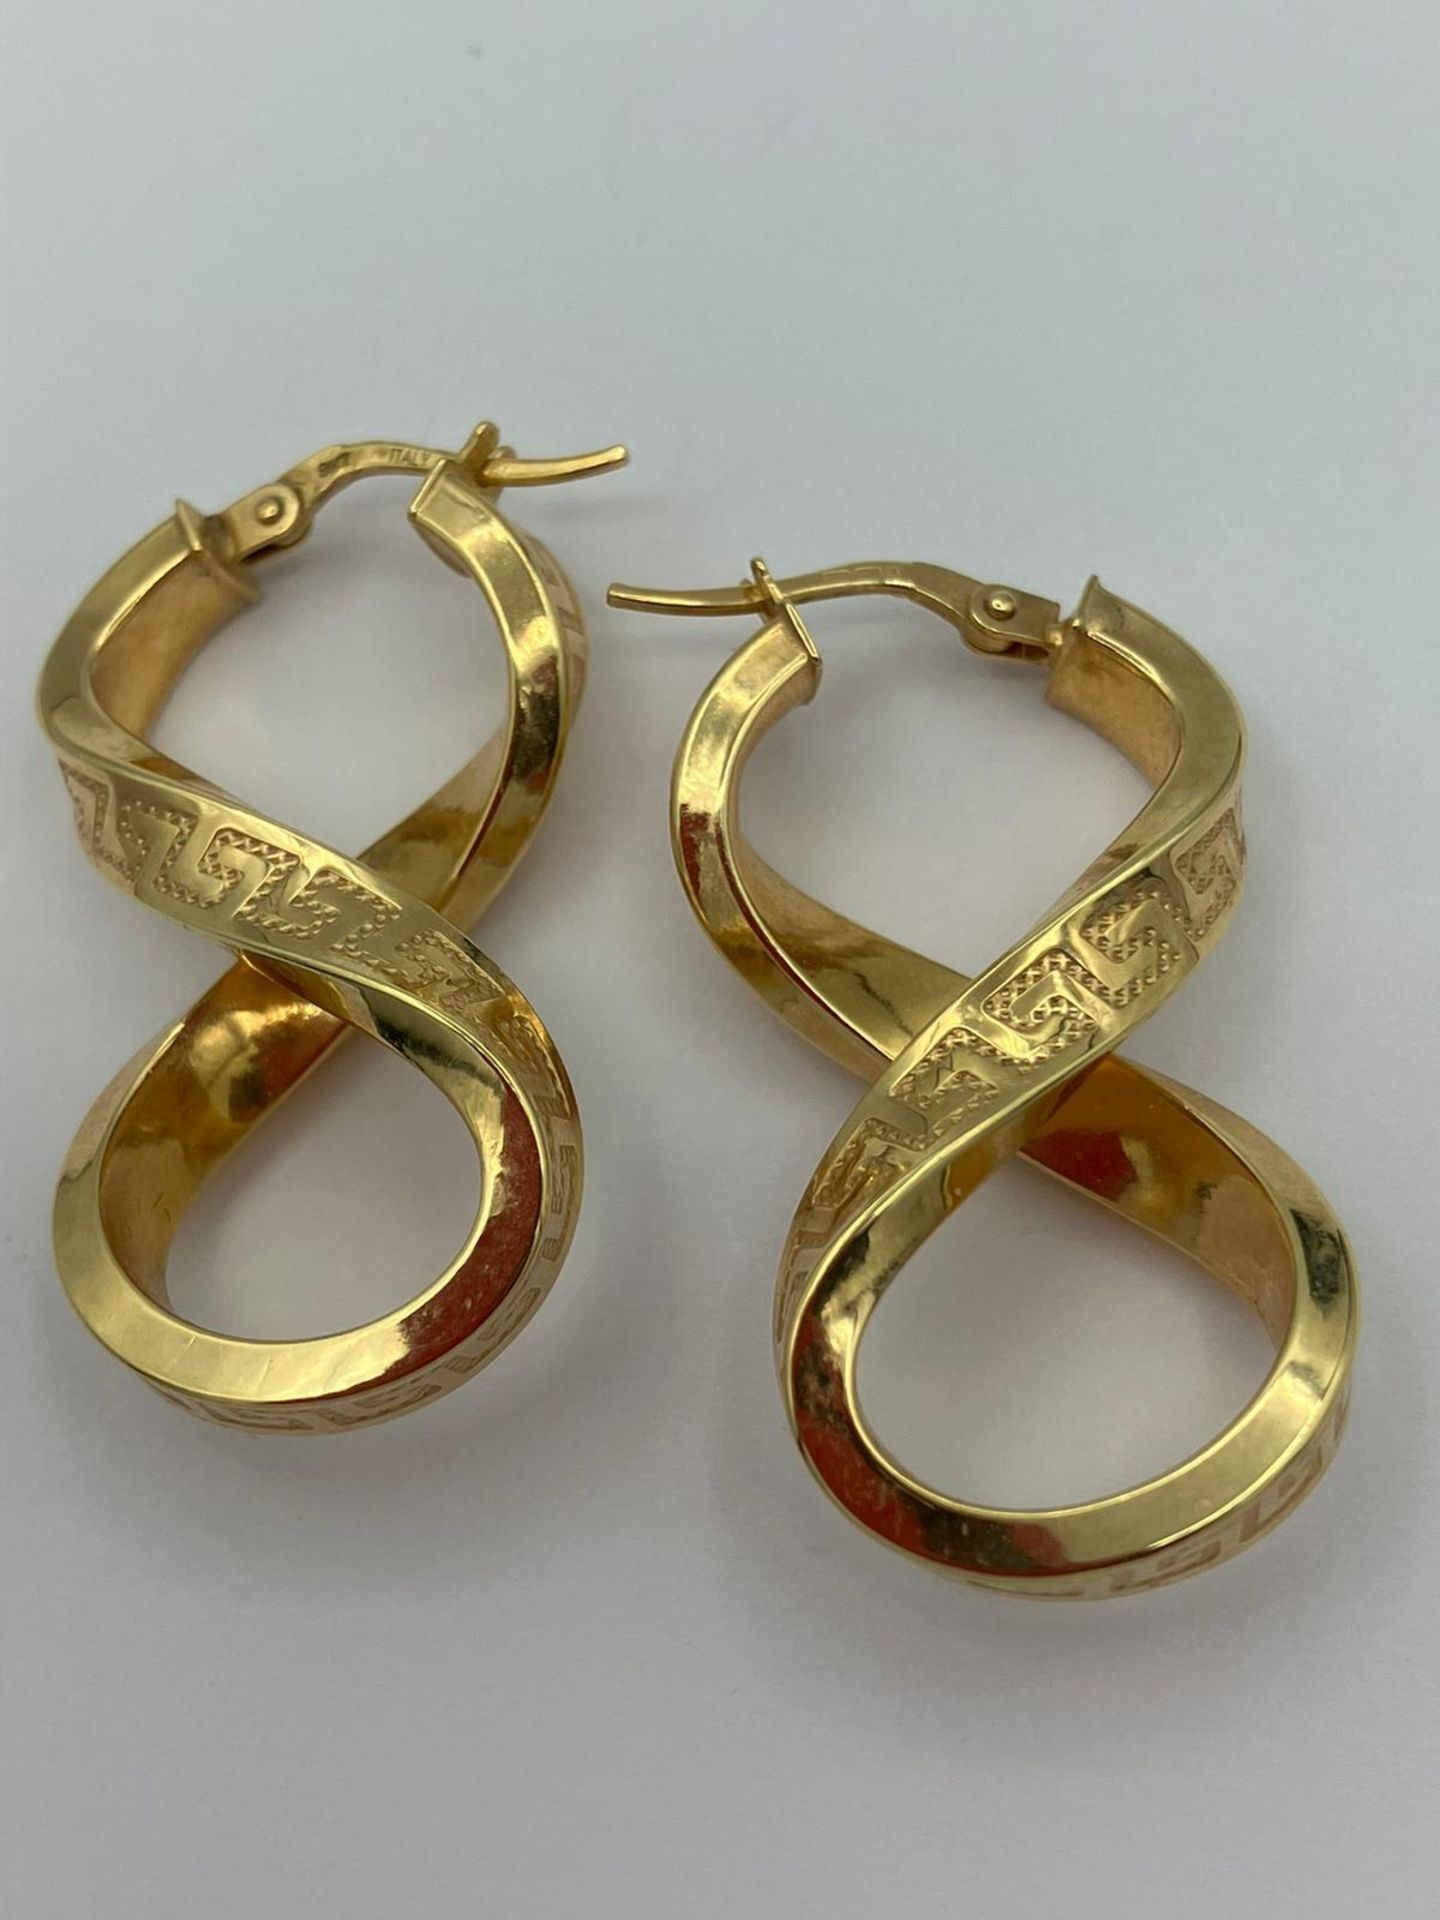 Beautiful pair of Italian designer 9 carat YELLOW GOLD EARRINGS in Statement figure of eight twist